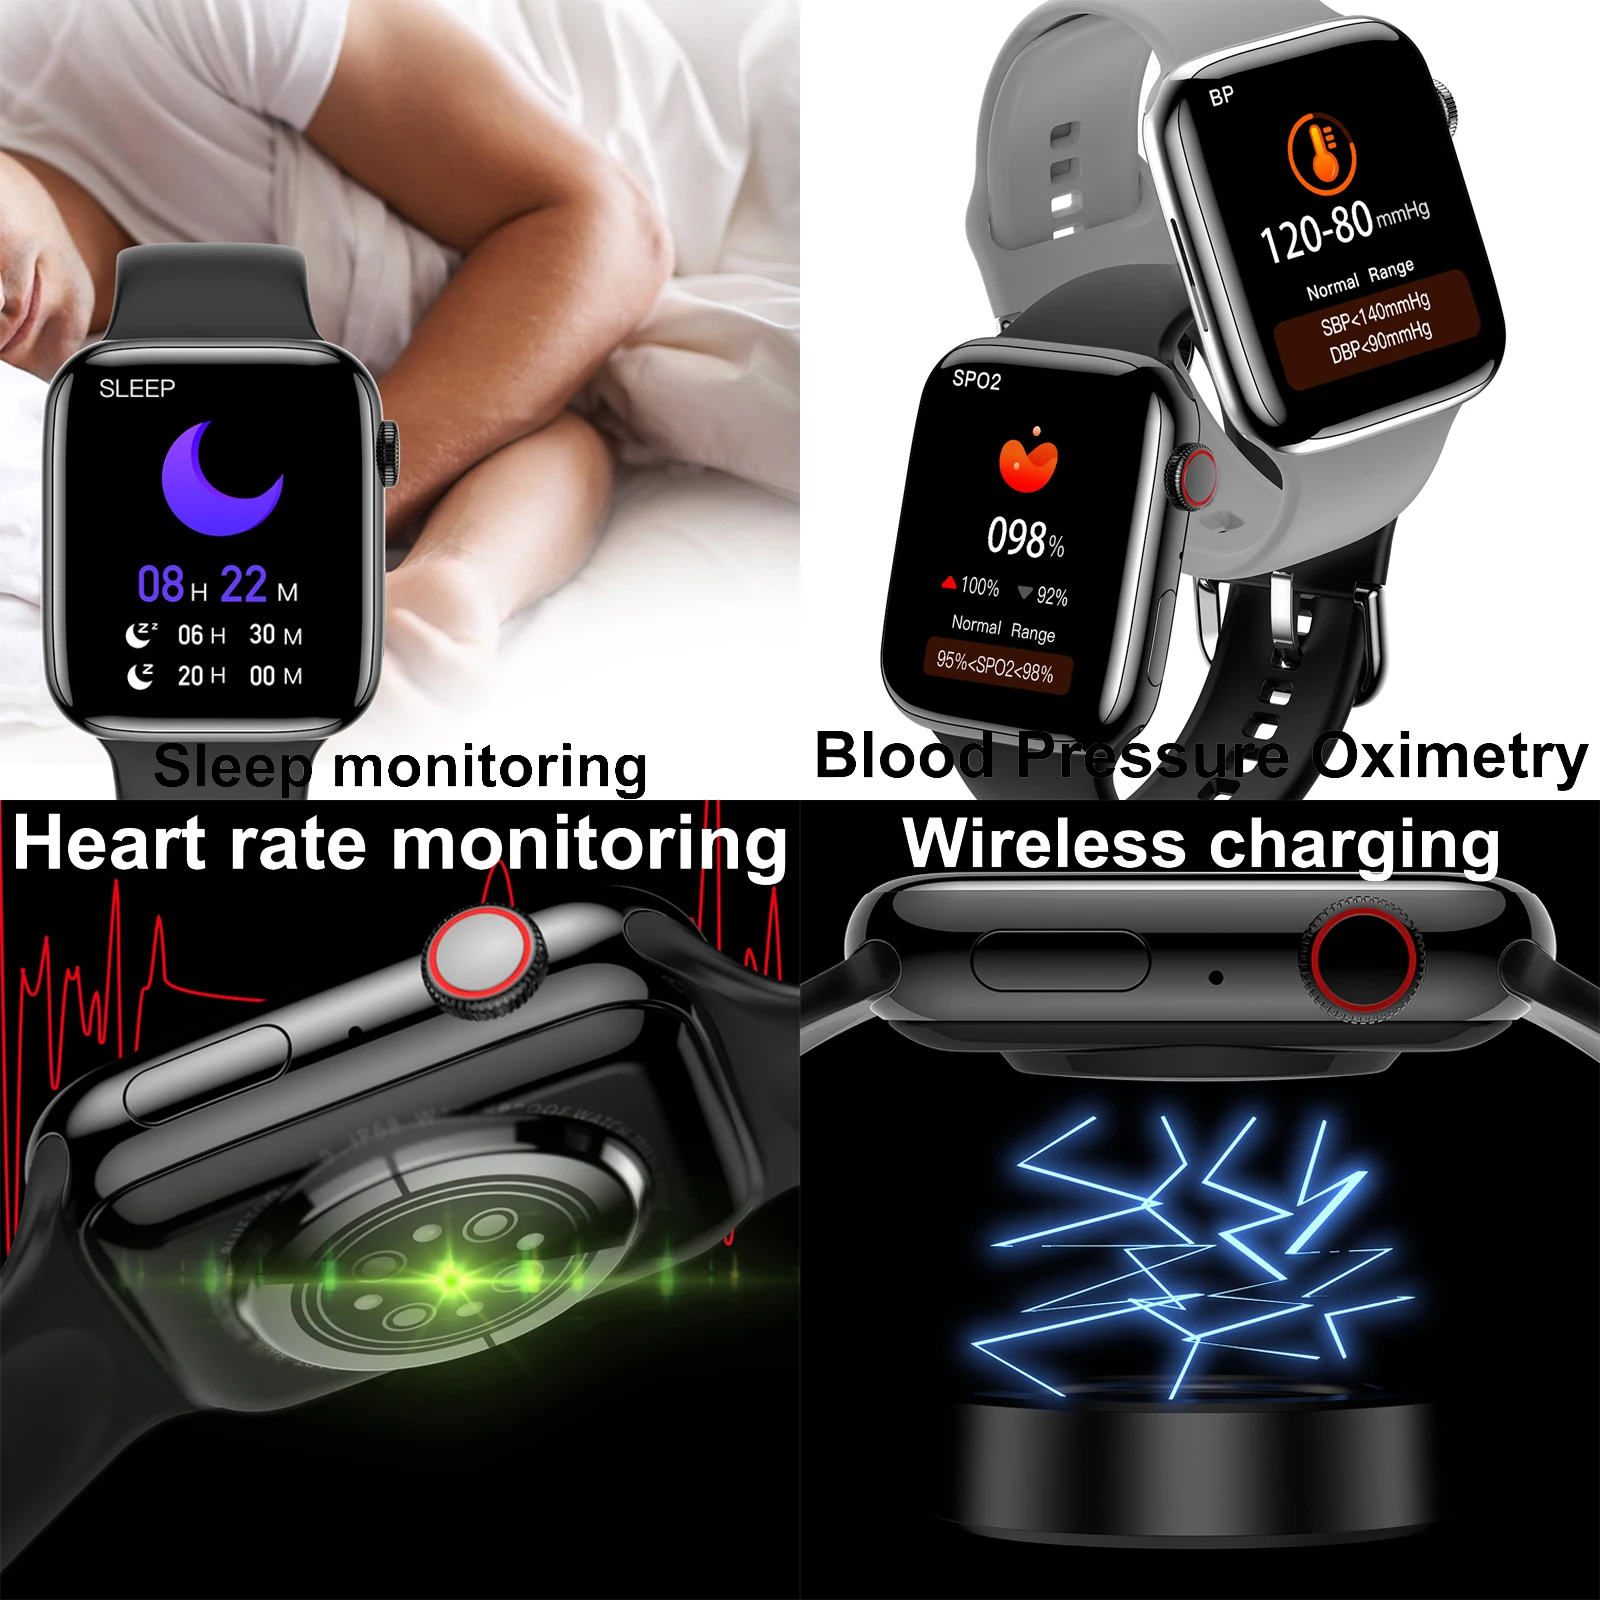 LEMFO смарт часы мужские женские NFC 1.8 inch 420*360 HD 330mAh battery умные 2022 Bluetooth вызов